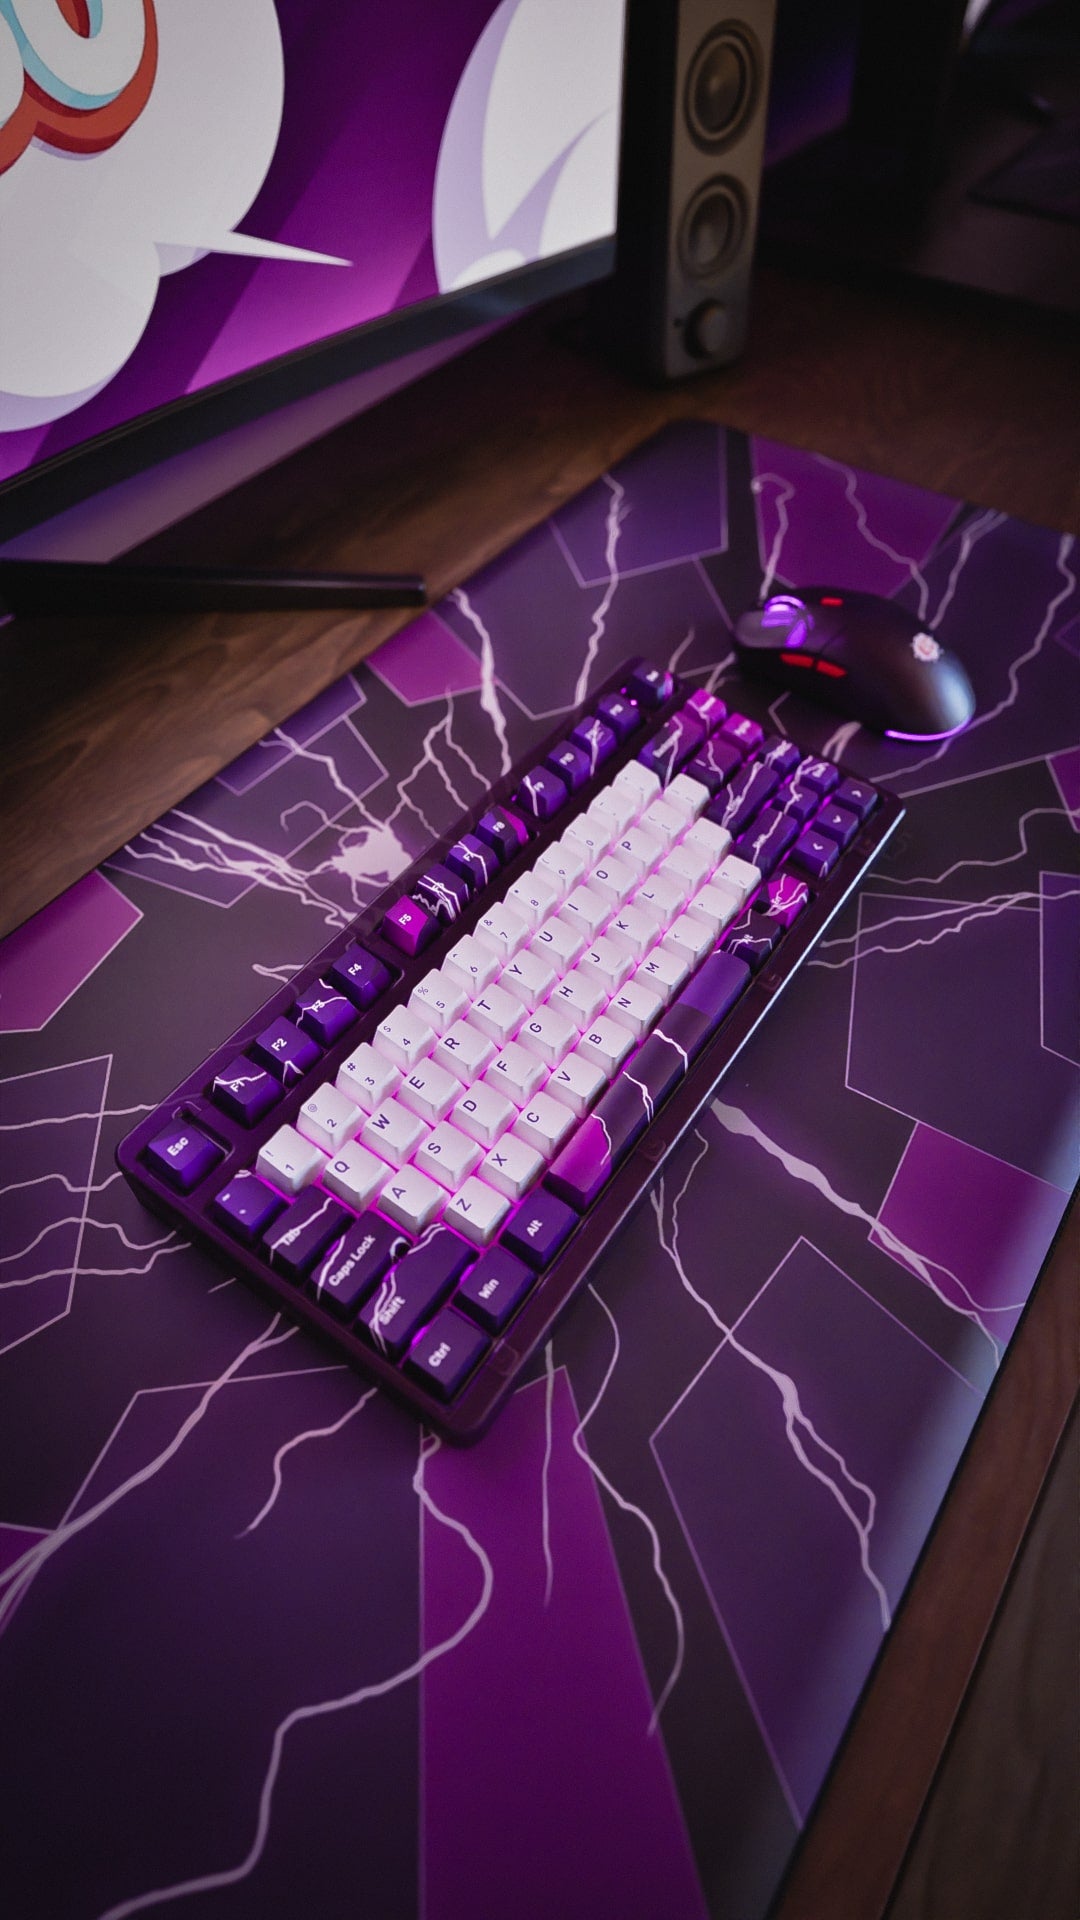 NickEh30 x Ghost K75 Keyboard Combo - Lightning Energy